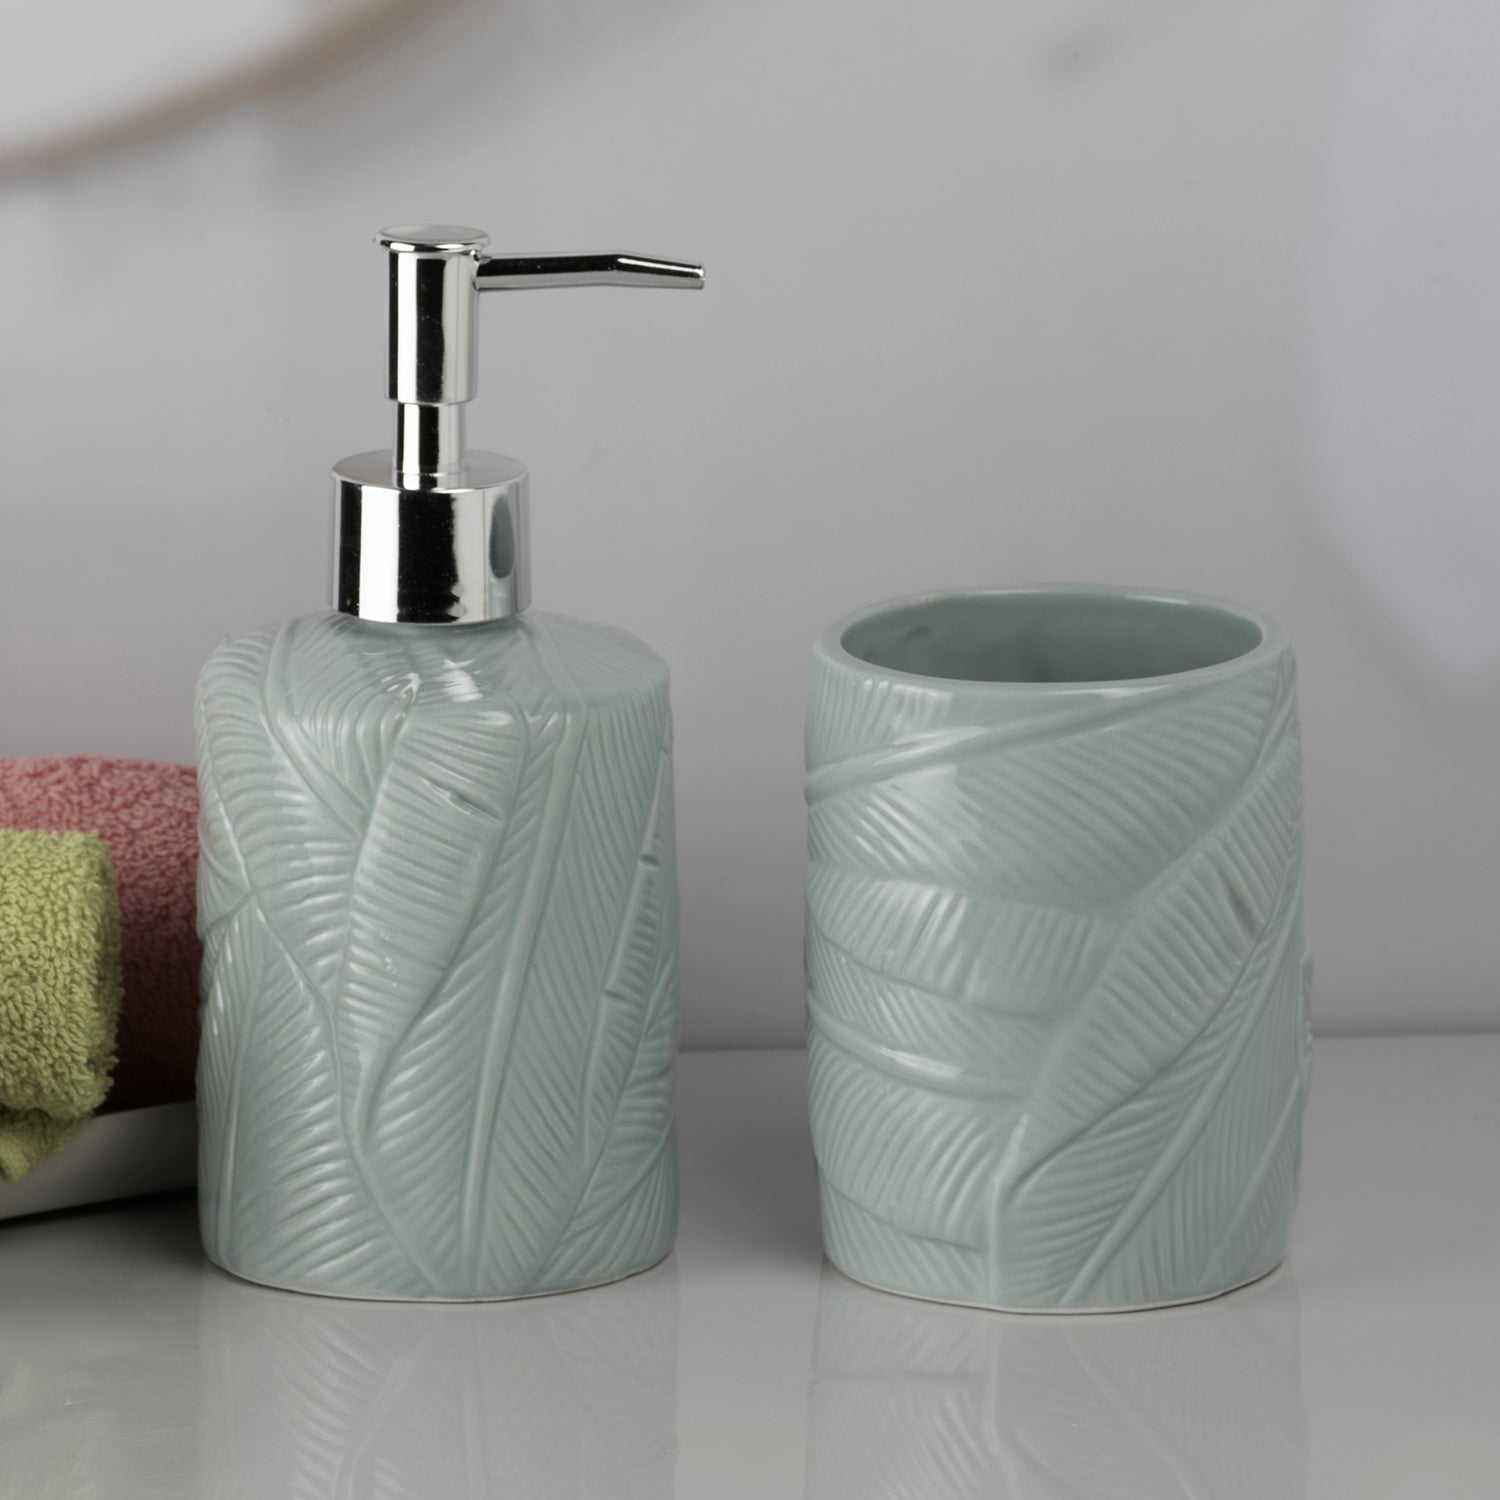 Ceramic Bathroom Accessories Set of 2 Bath Set with Soap Dispenser (9606)